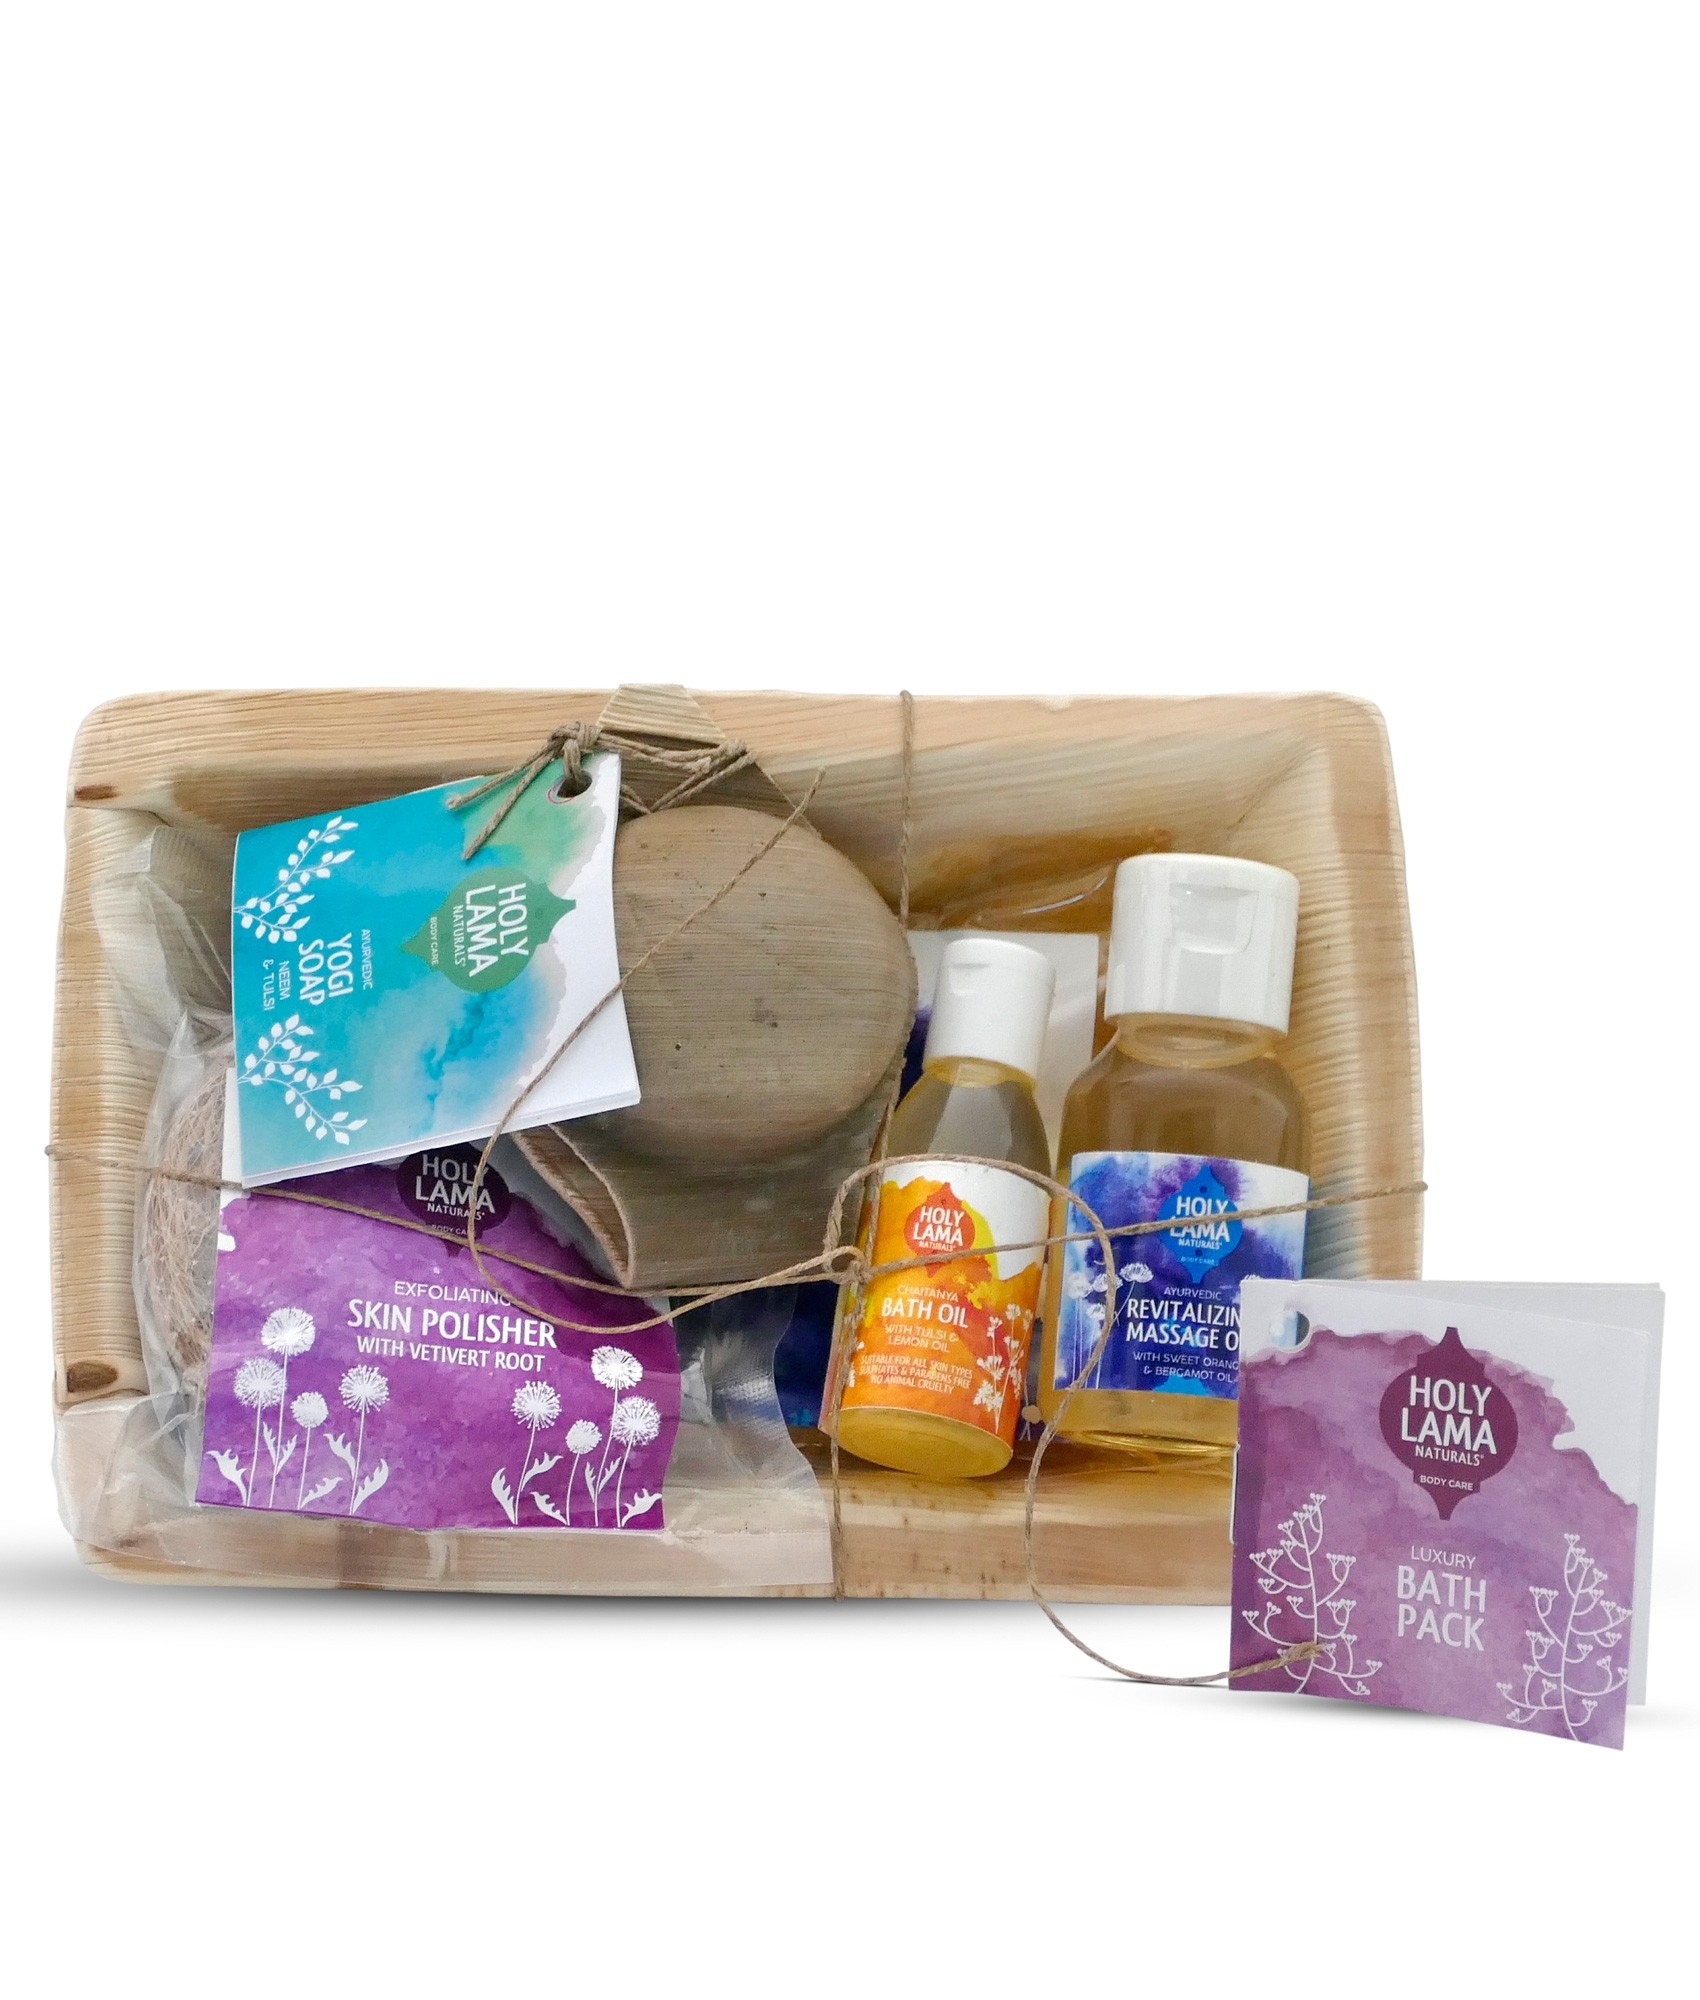 Holy Lama Naturals Luxury Bath Pack Gift Set 